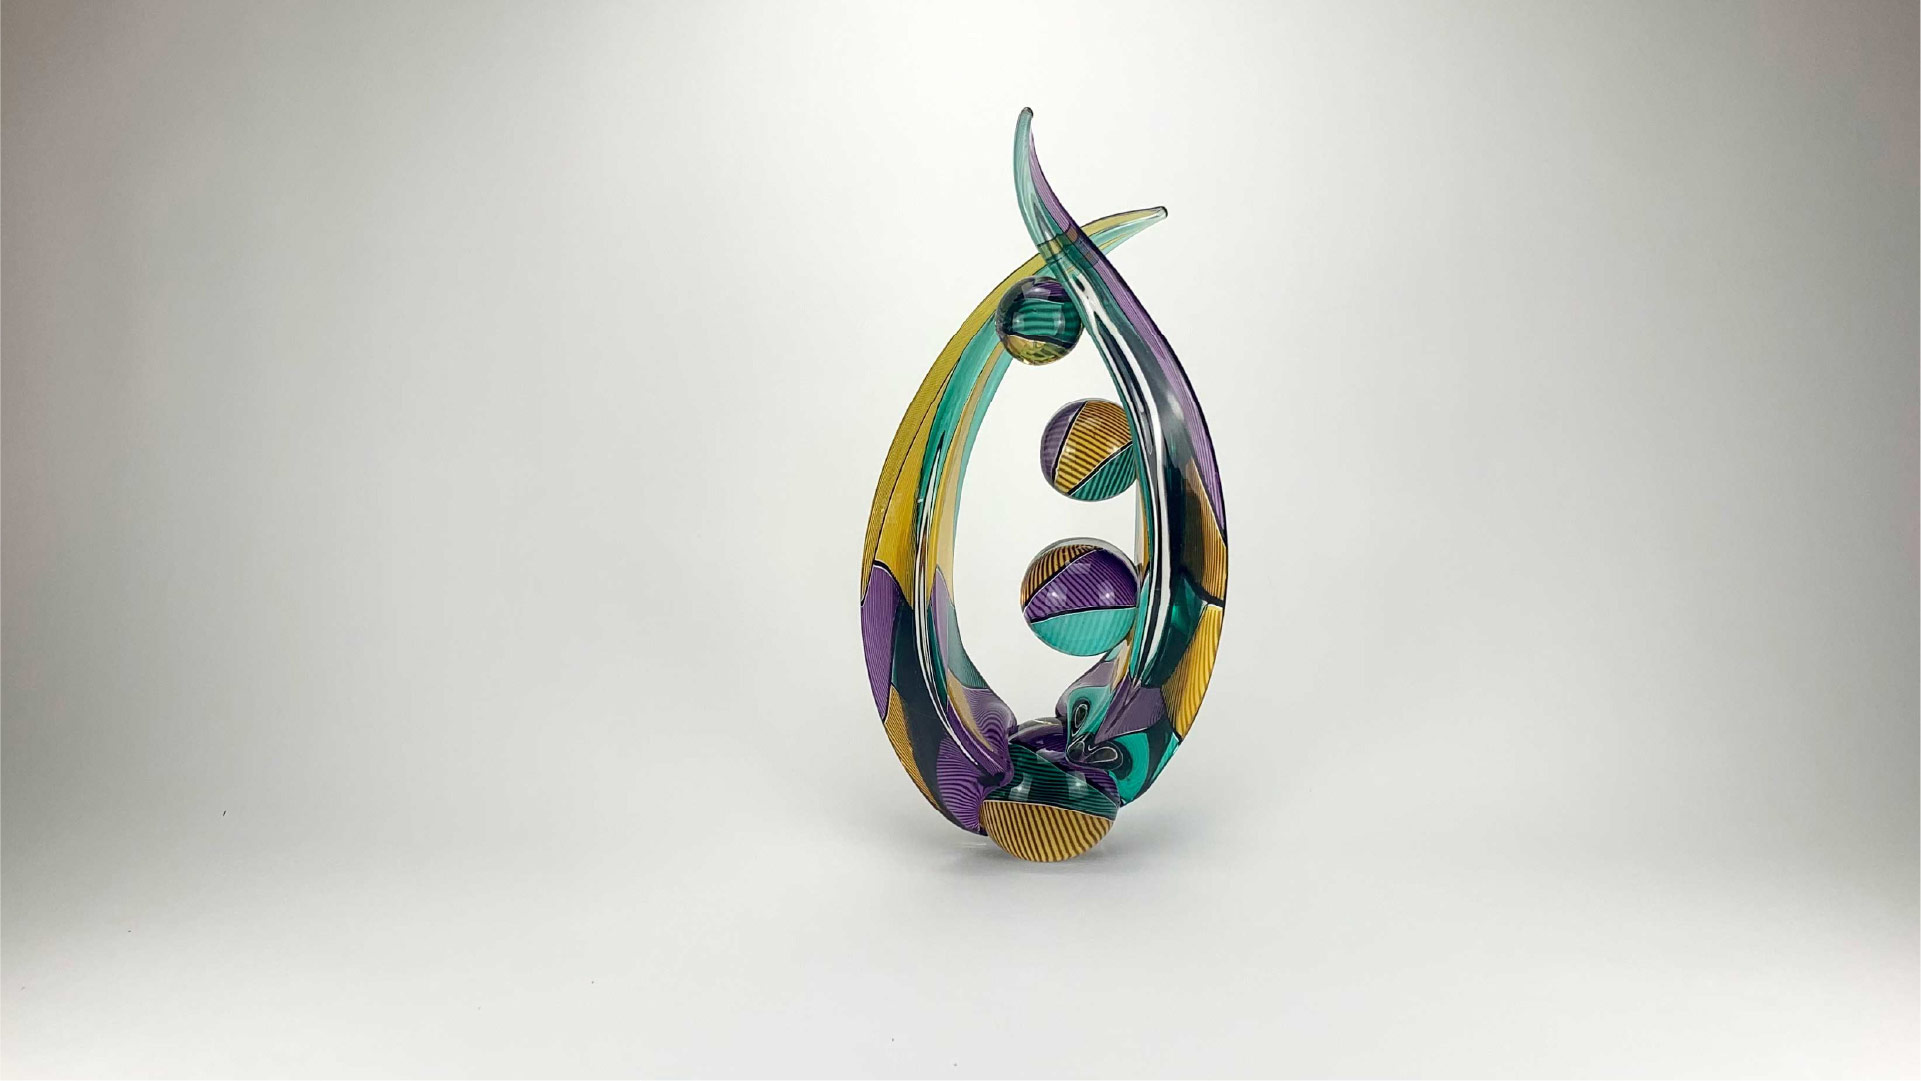 Richard-royal-Apropo-series-Desire-A21-05-MArdi-Gras-purple-gold-teal-solid-glass-sculpture